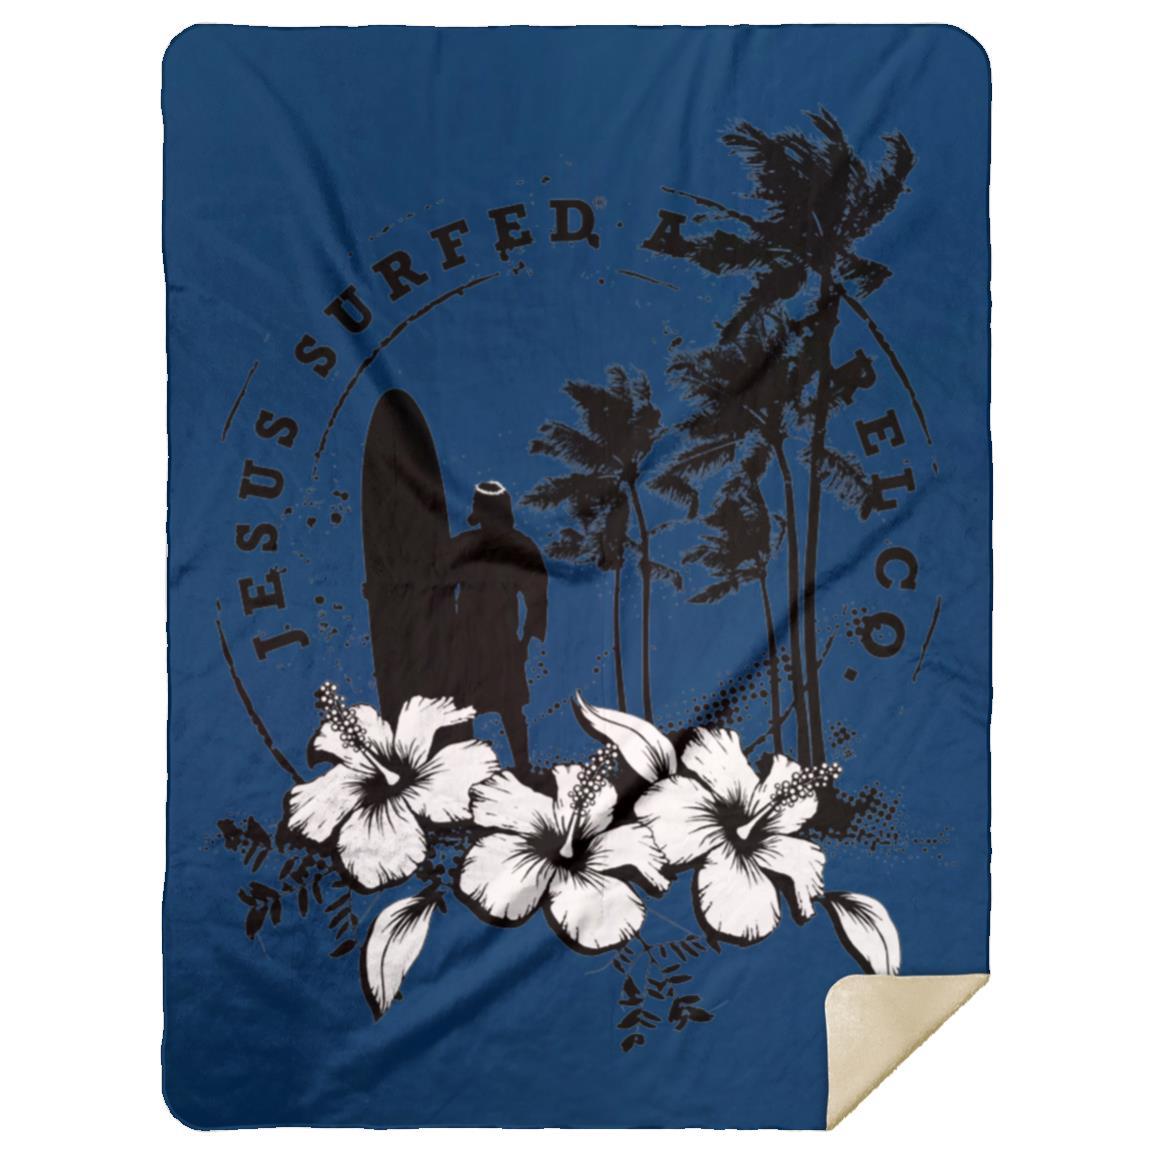 Jesus Surfed Apparel Premium Mink Sherpa Blanket 60x80